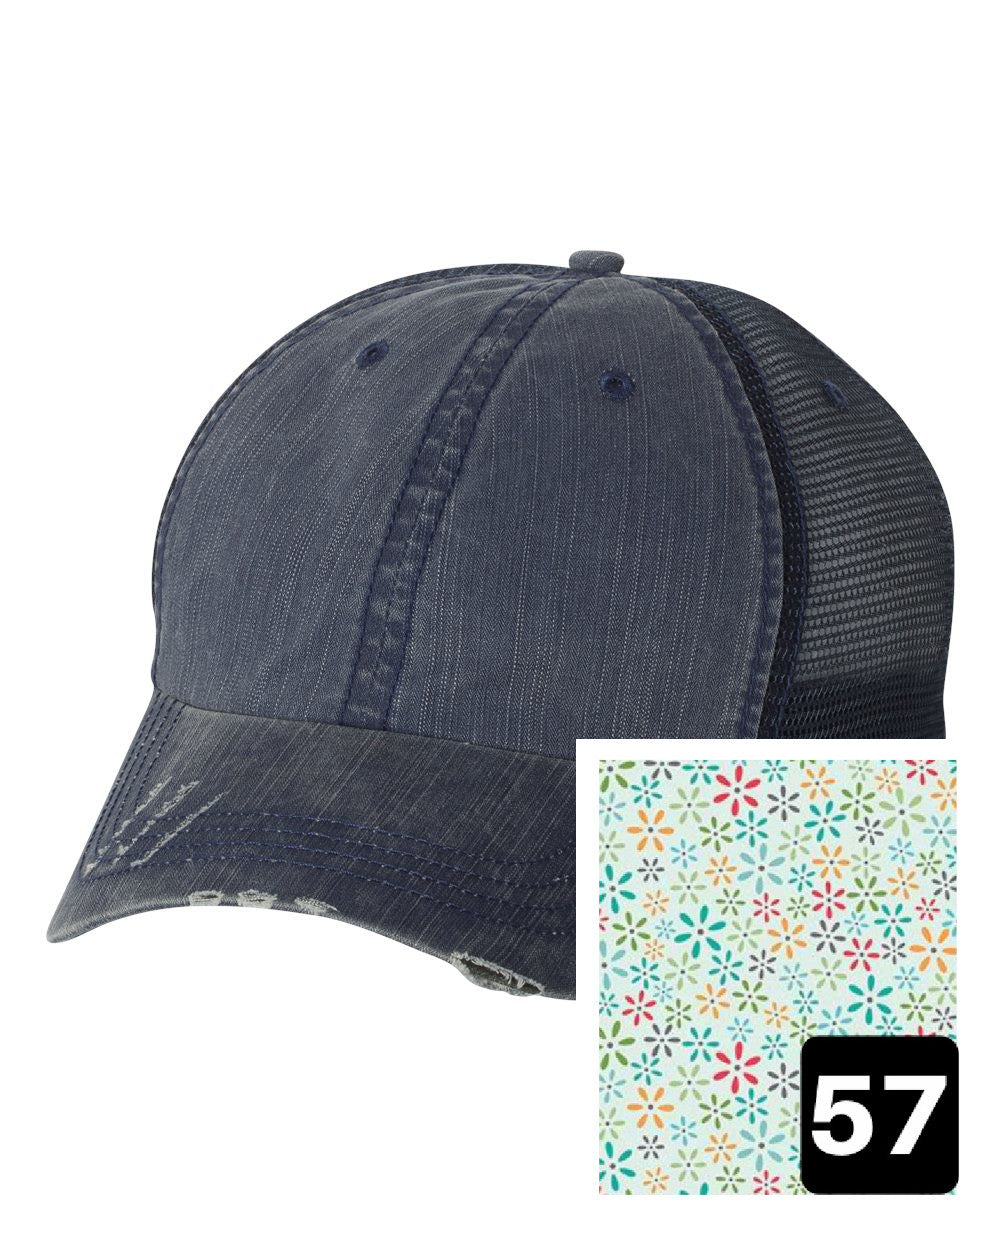 Montana Hat | Navy Distressed Trucker Cap | Many Fabric Choices